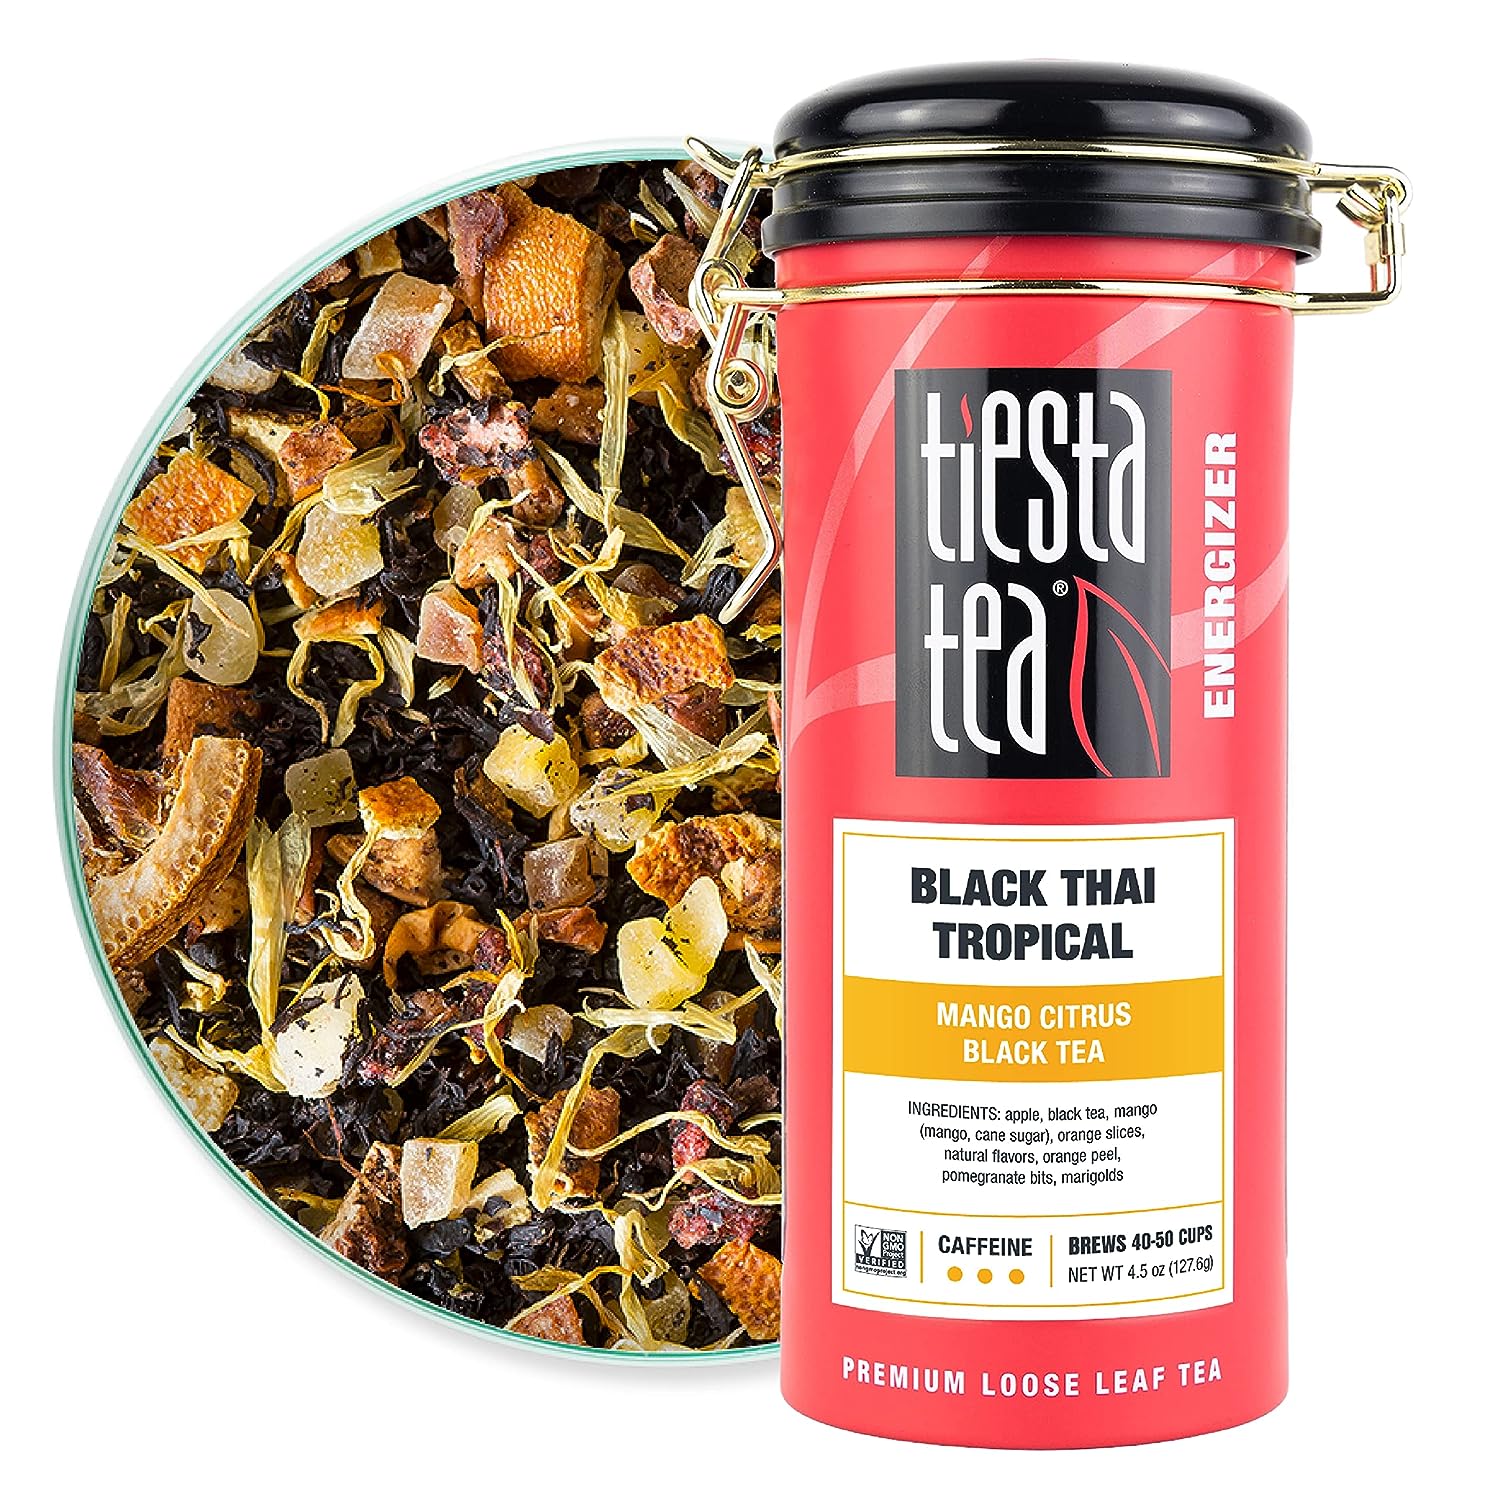 Tiesta Tea - Black Thai Tropical, Mango Citrus Black Tea, Loose Leaf, Up to 50 Cups, Make Hot or Iced, Caffeinated, Refillable Tin